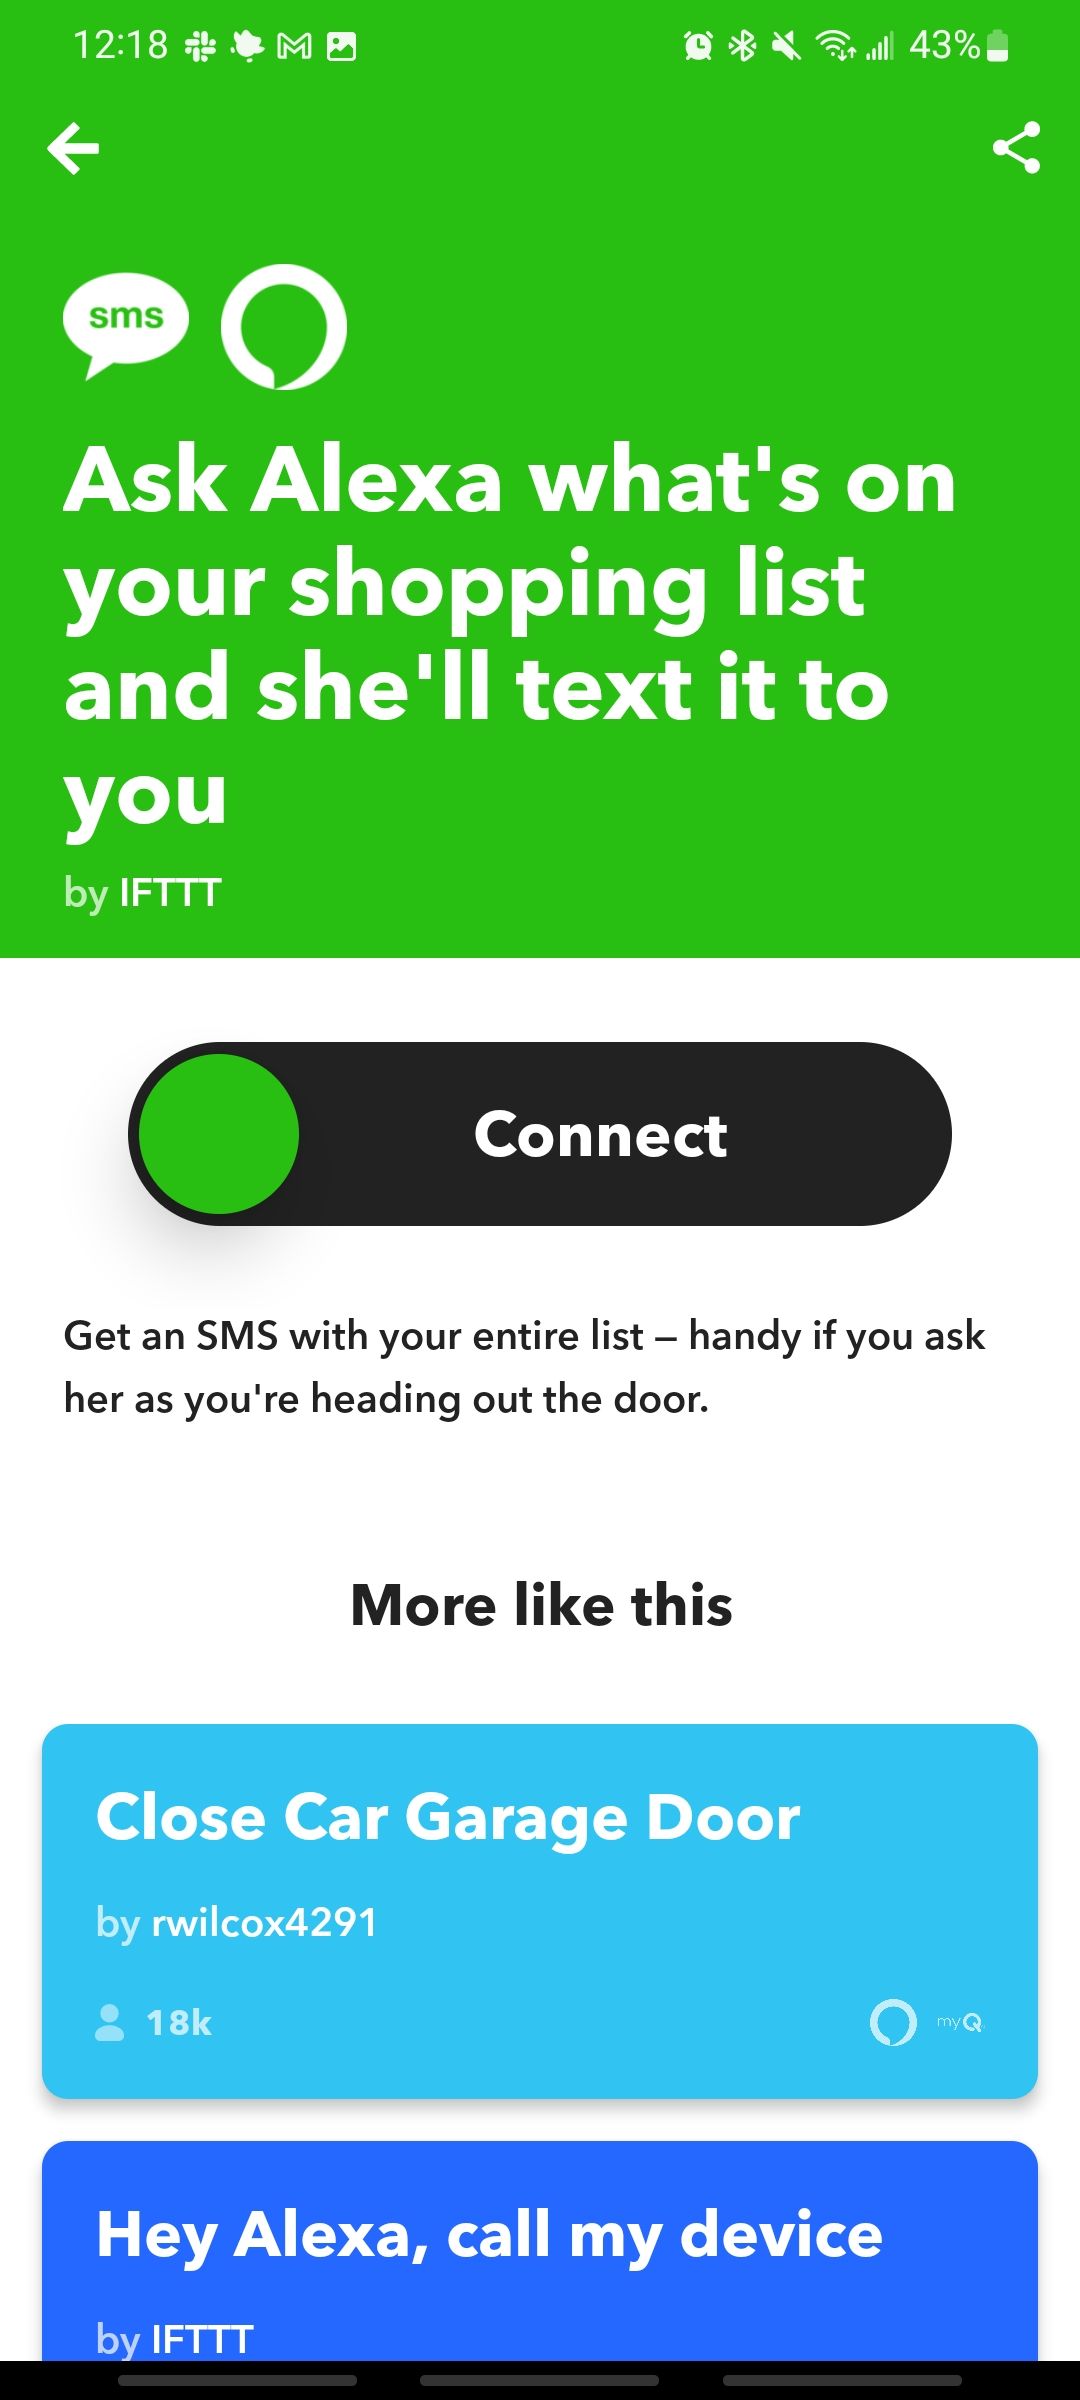 ifttt applet where alexa will text you your shopping list